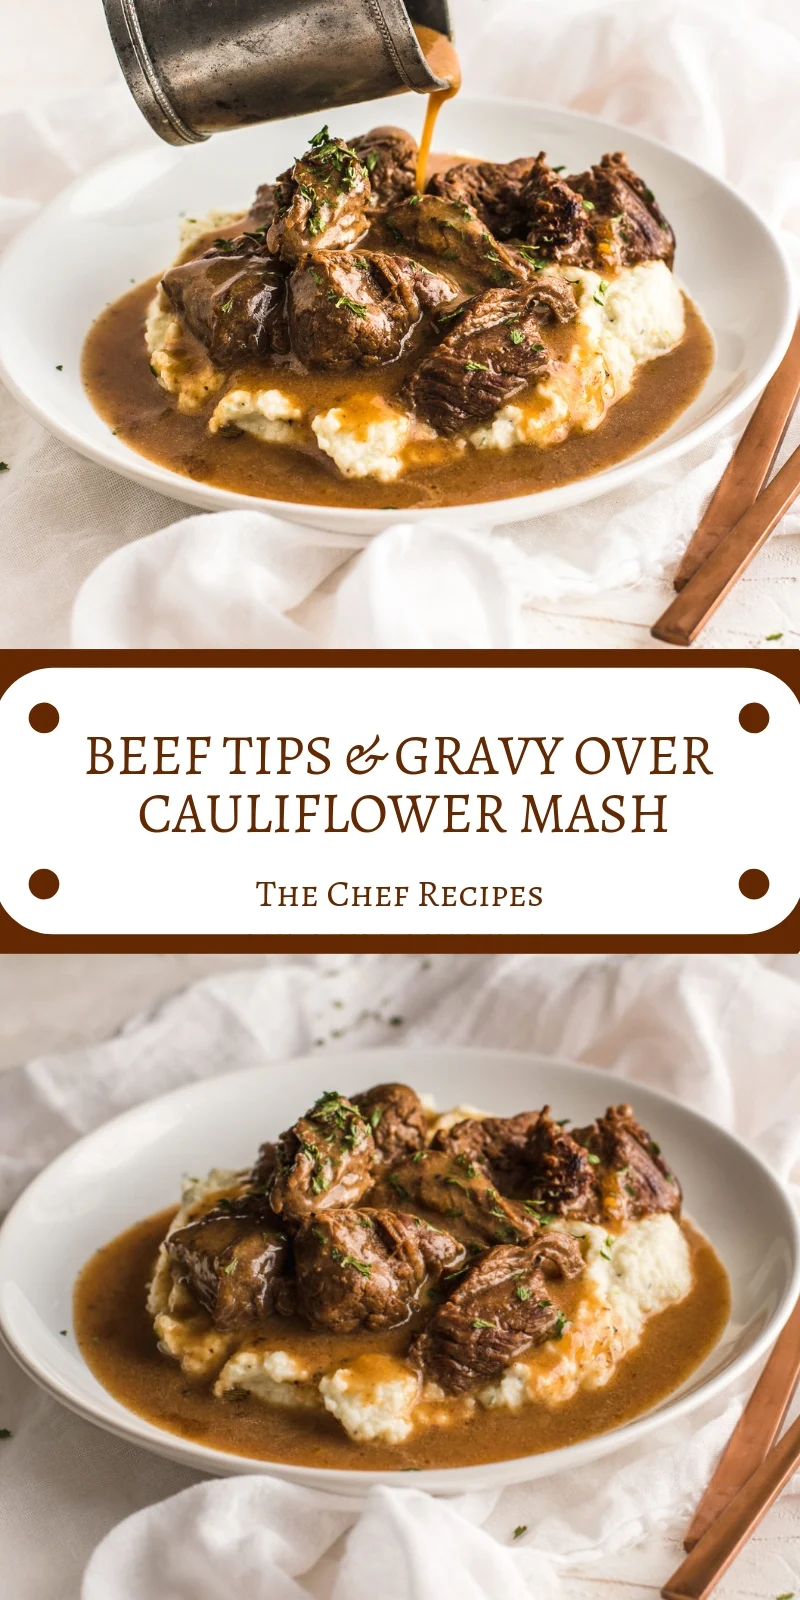 BEEF TIPS & GRAVY OVER CAULIFLOWER MASH